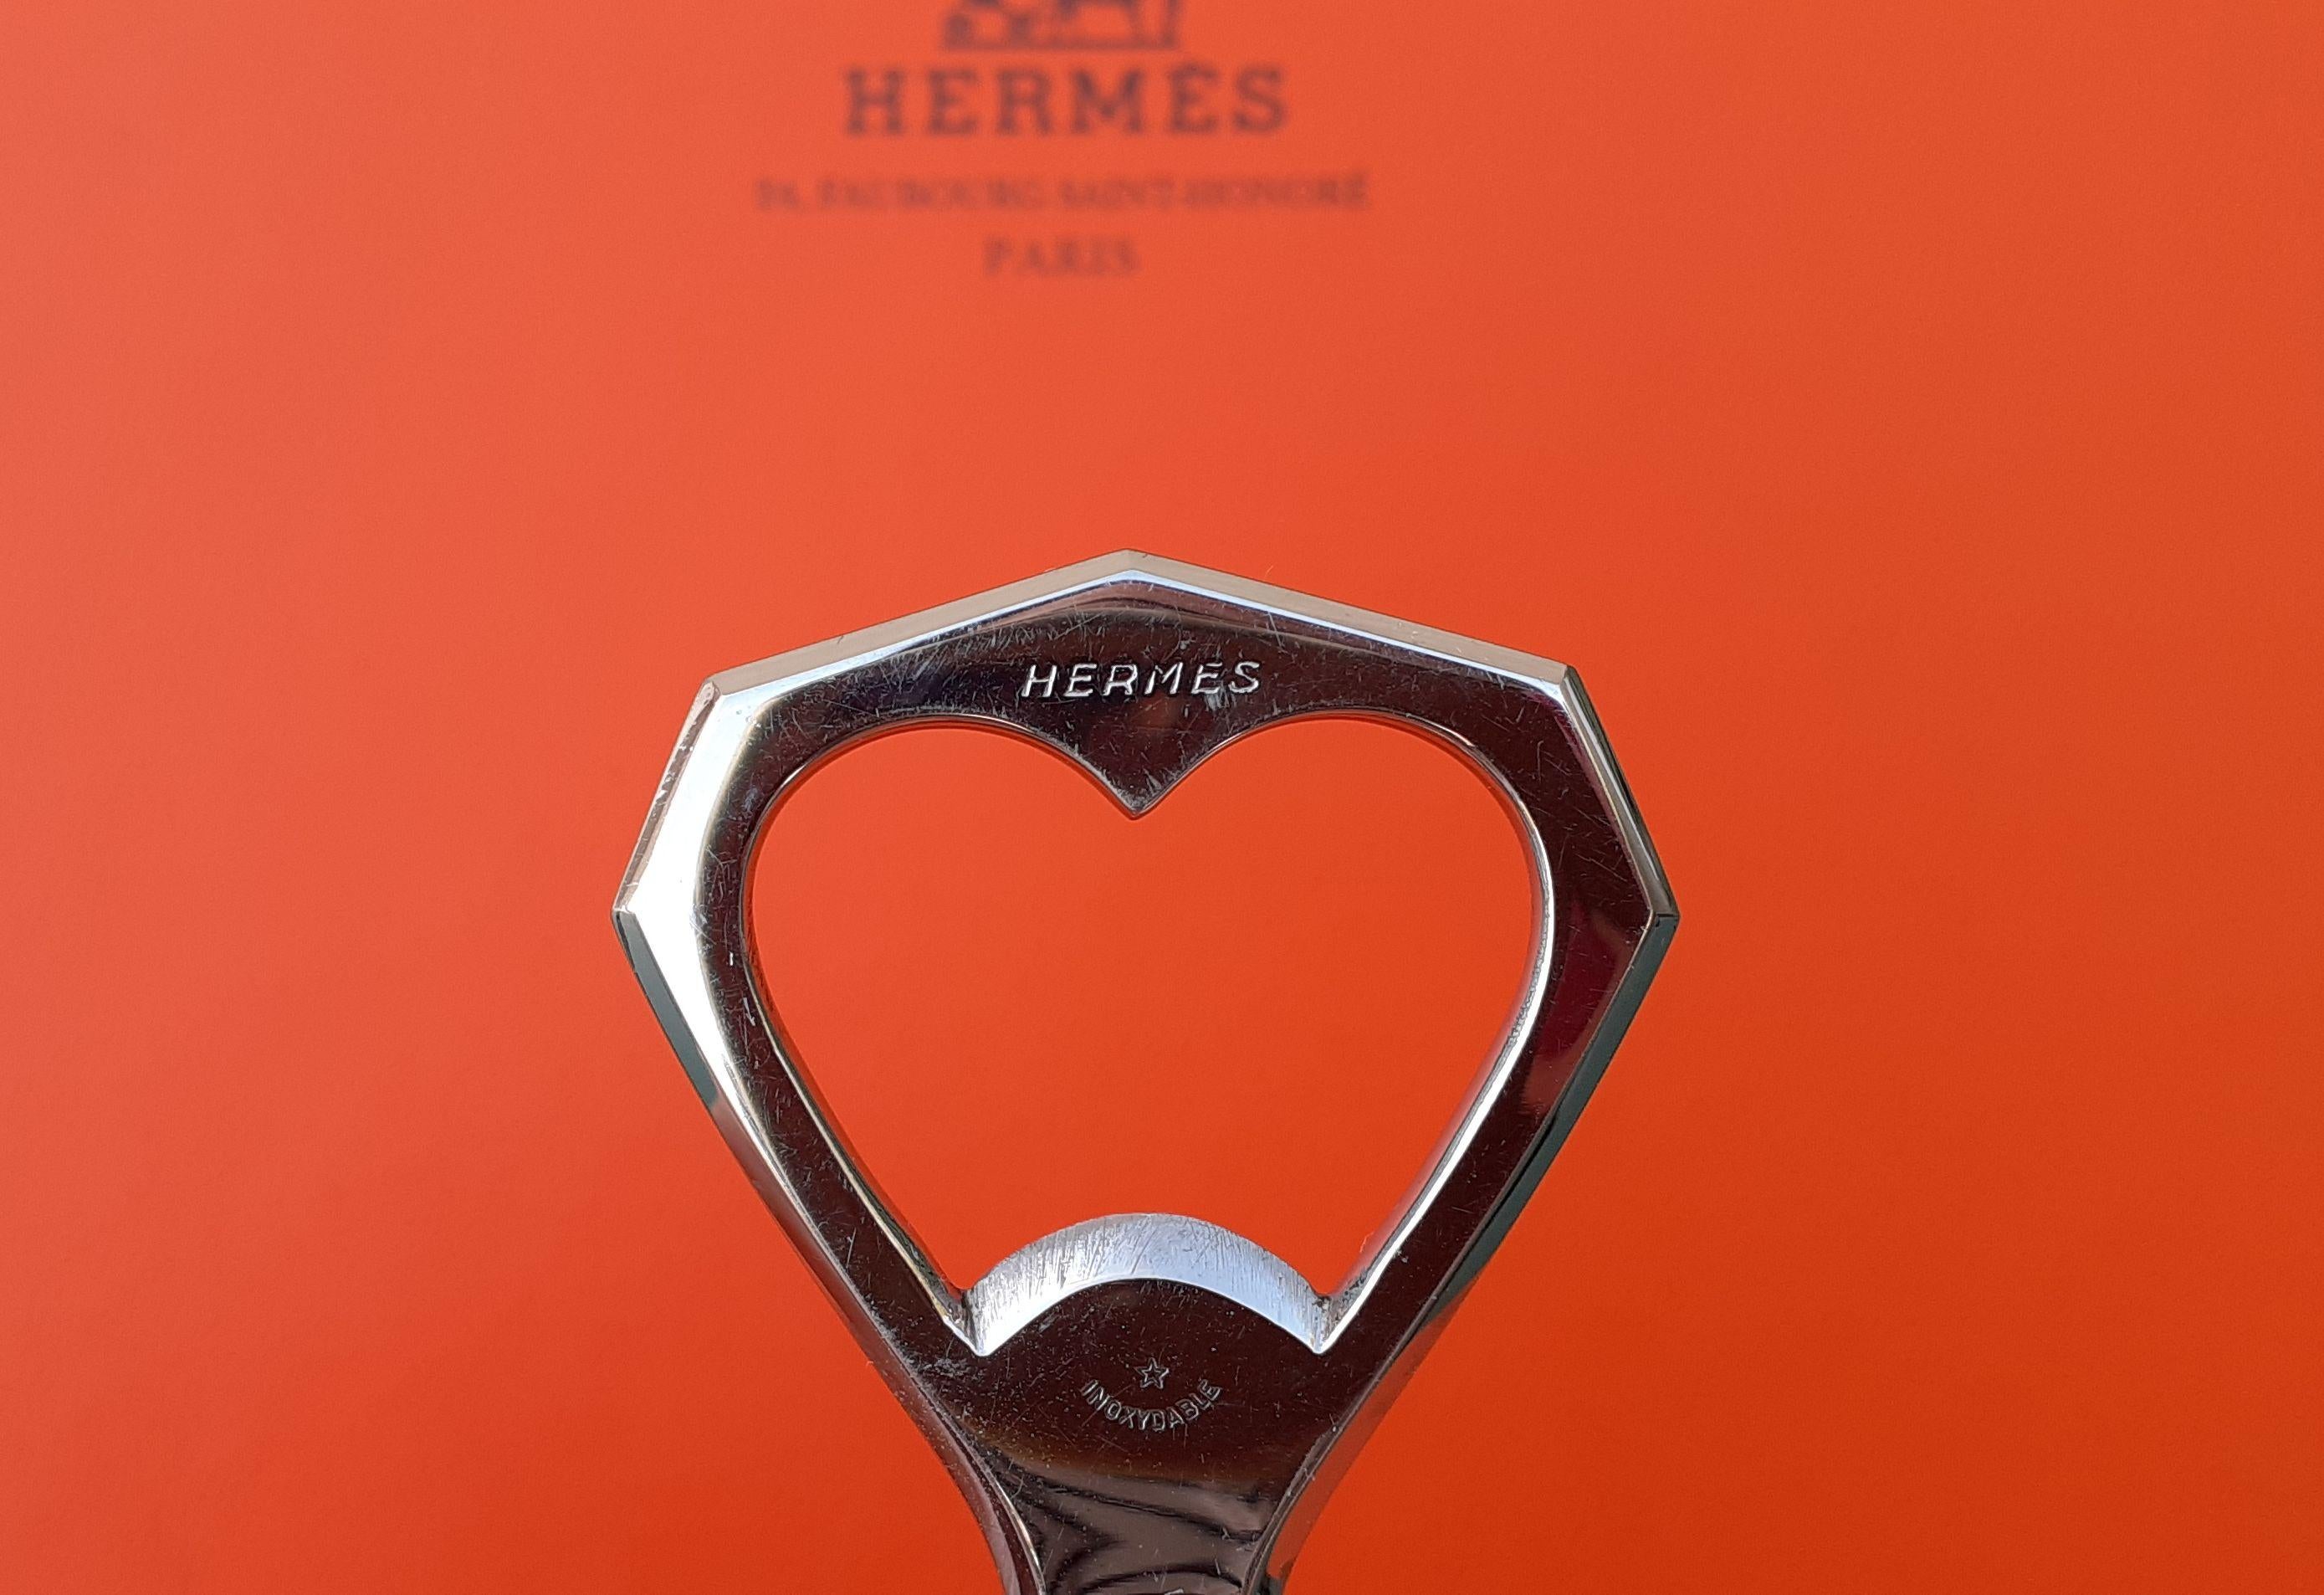 Exceptional Hermès Horse Bit Shaped Bottle Opener  For Sale 1